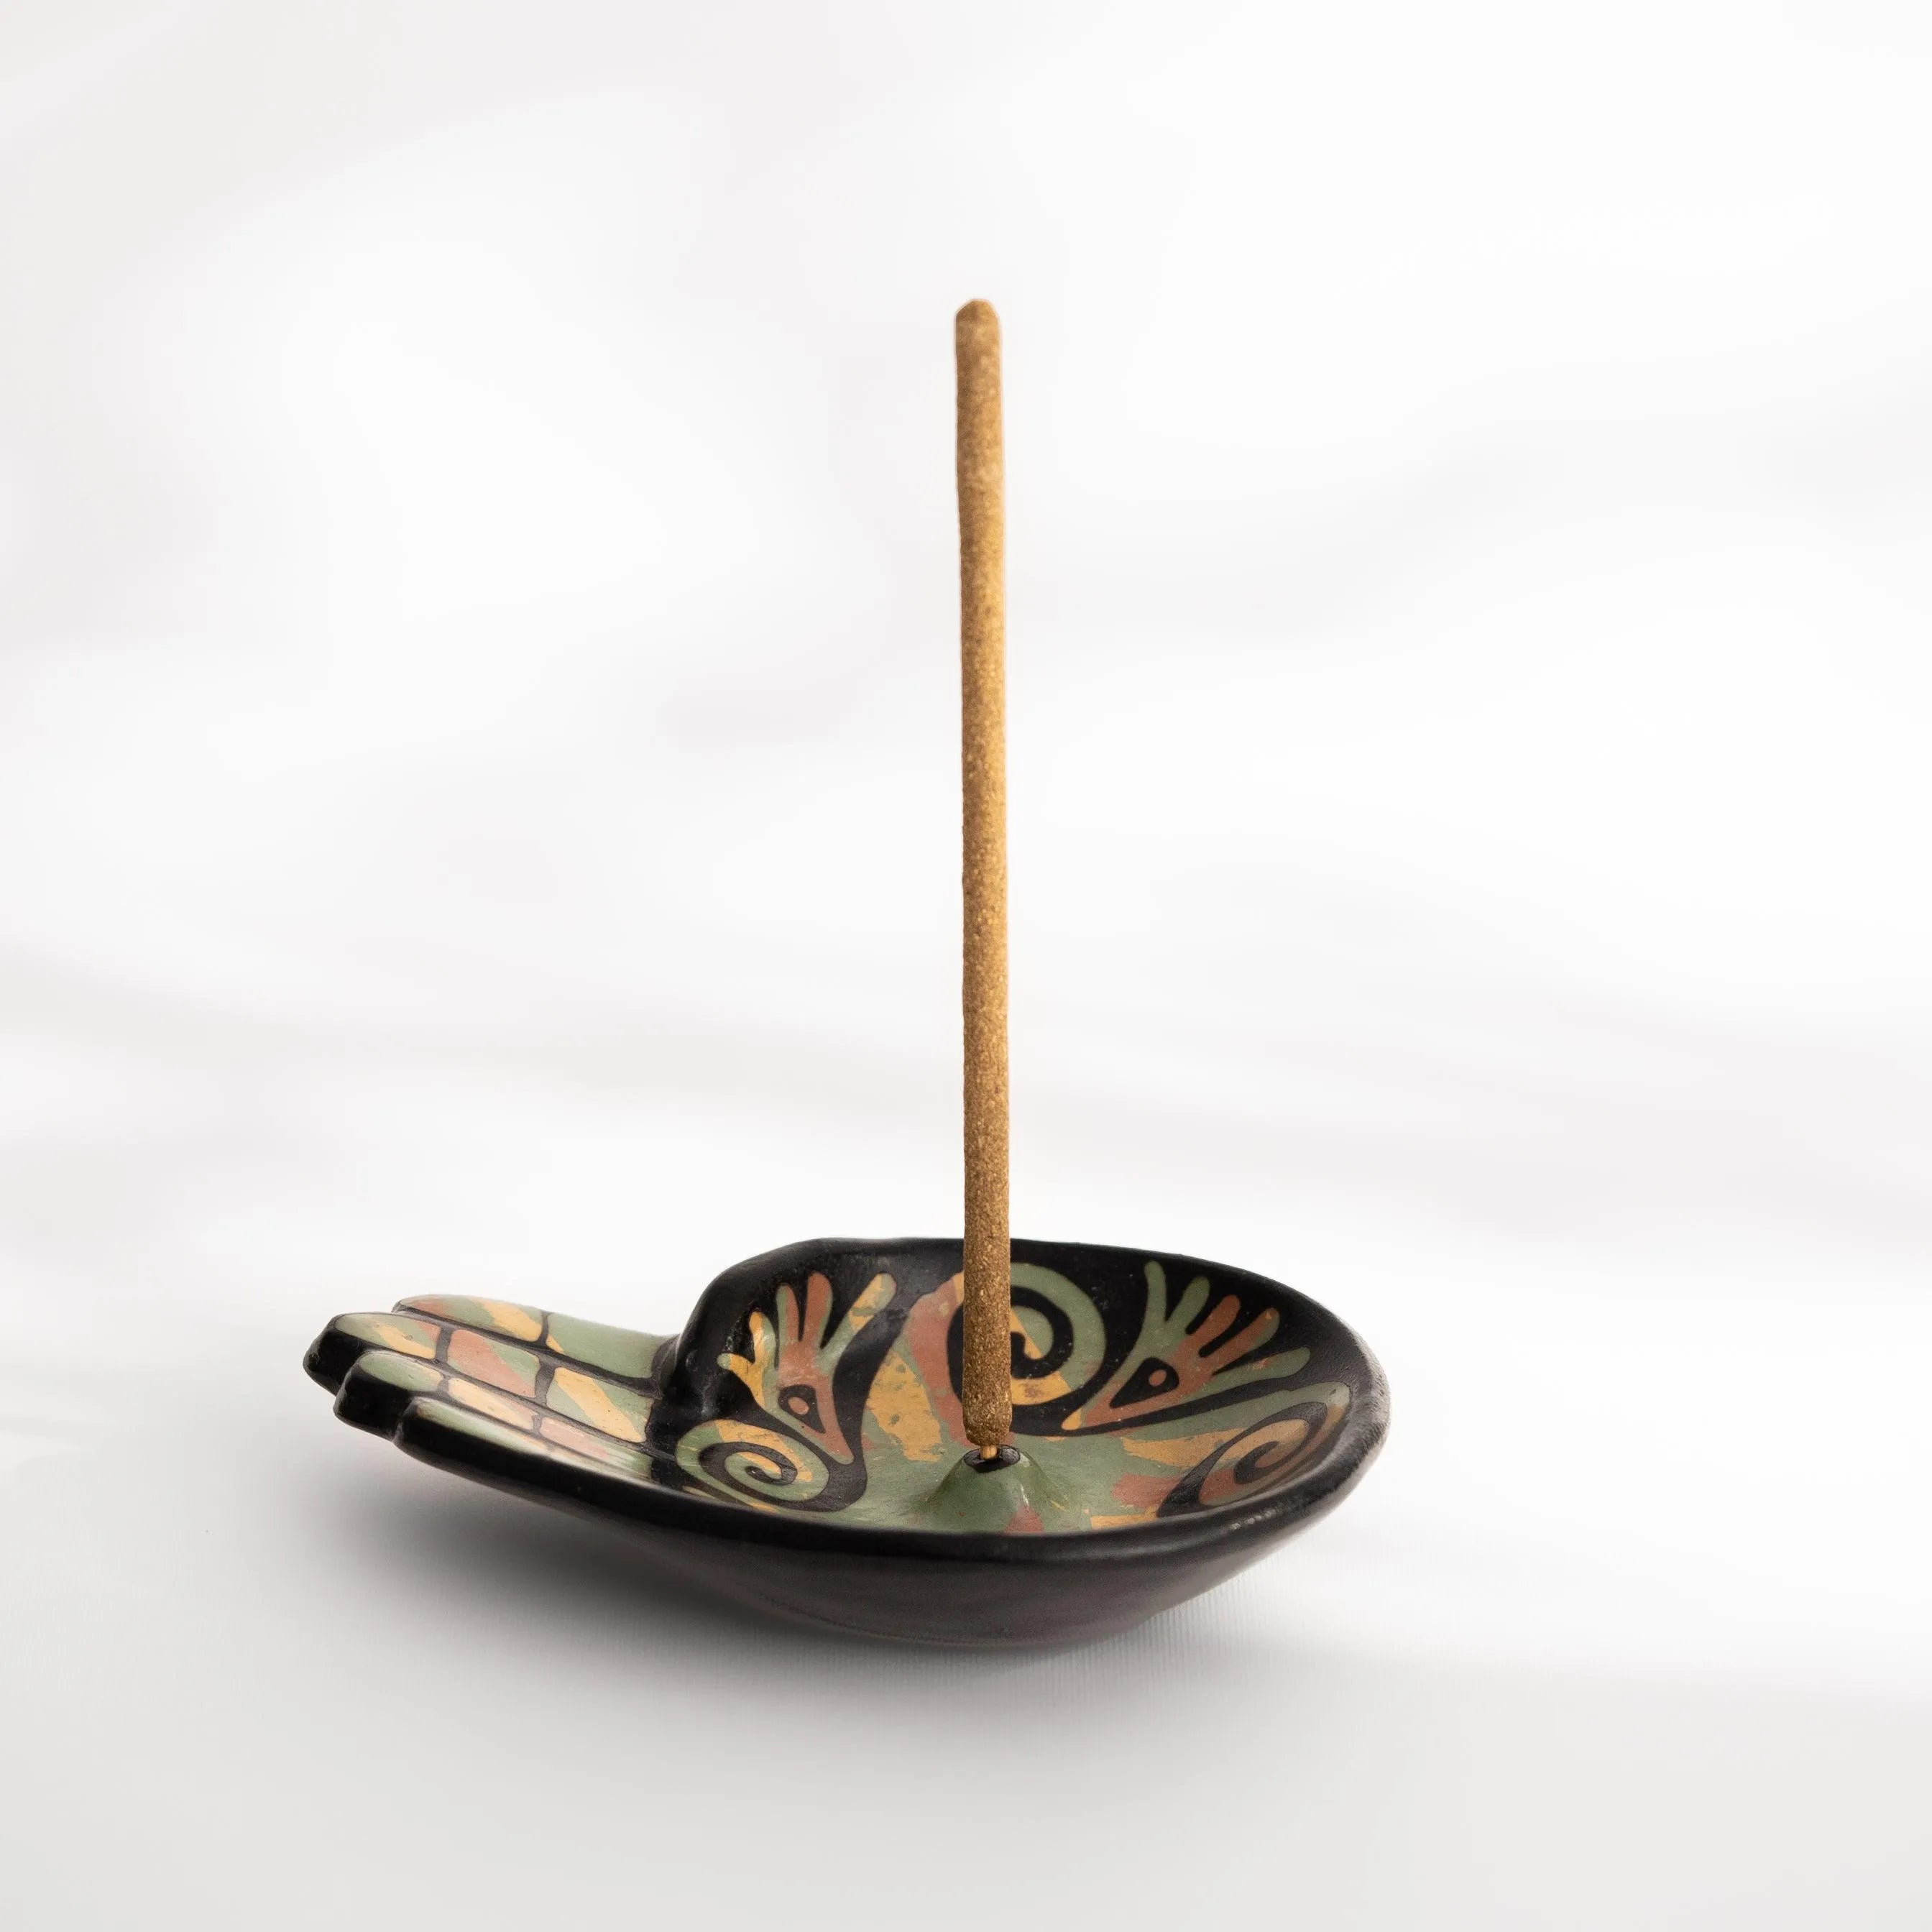 incense-holder-modelo-mano-handmade-in-chulucanas-peru-luna-sundara-3 - Luna Sundara